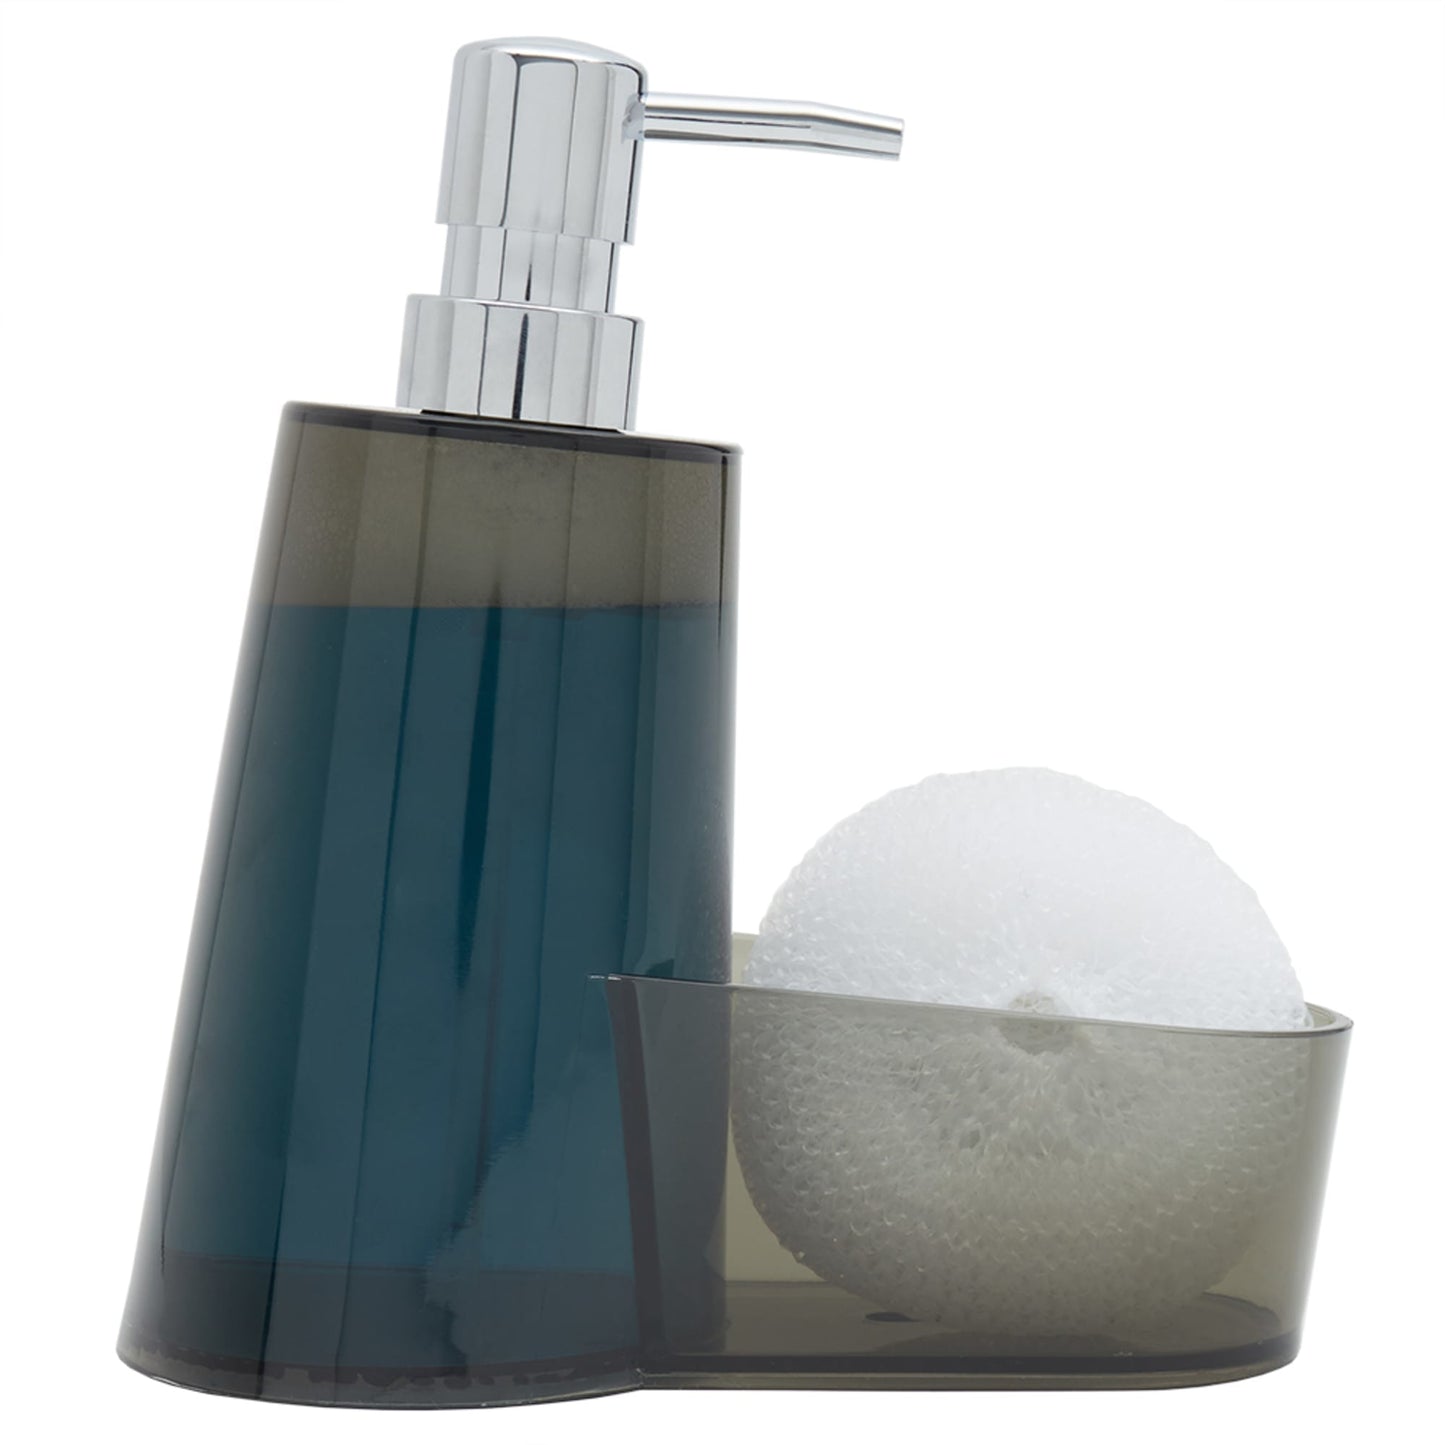 13.5 oz. Plastic Soap Dispenser with Sponge Compartment, Grey